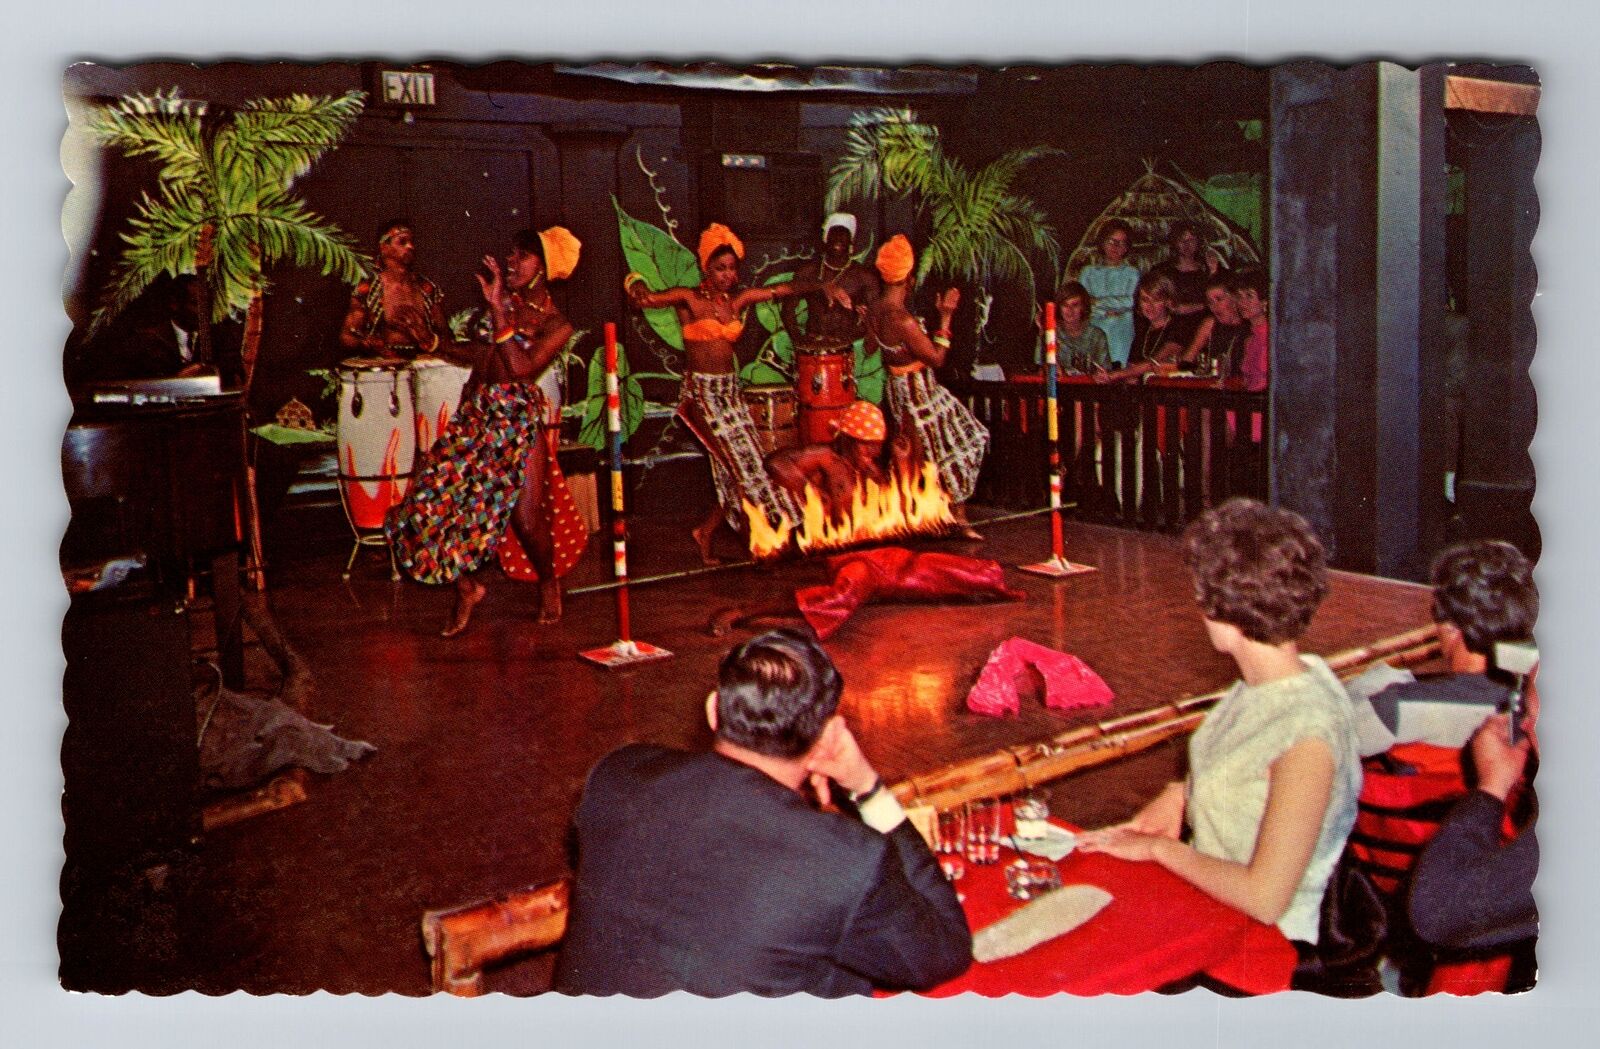 Hamilton-Bermuda, Limbo Dancers Perform In Jungle Room Souvenir Vintage Postcard